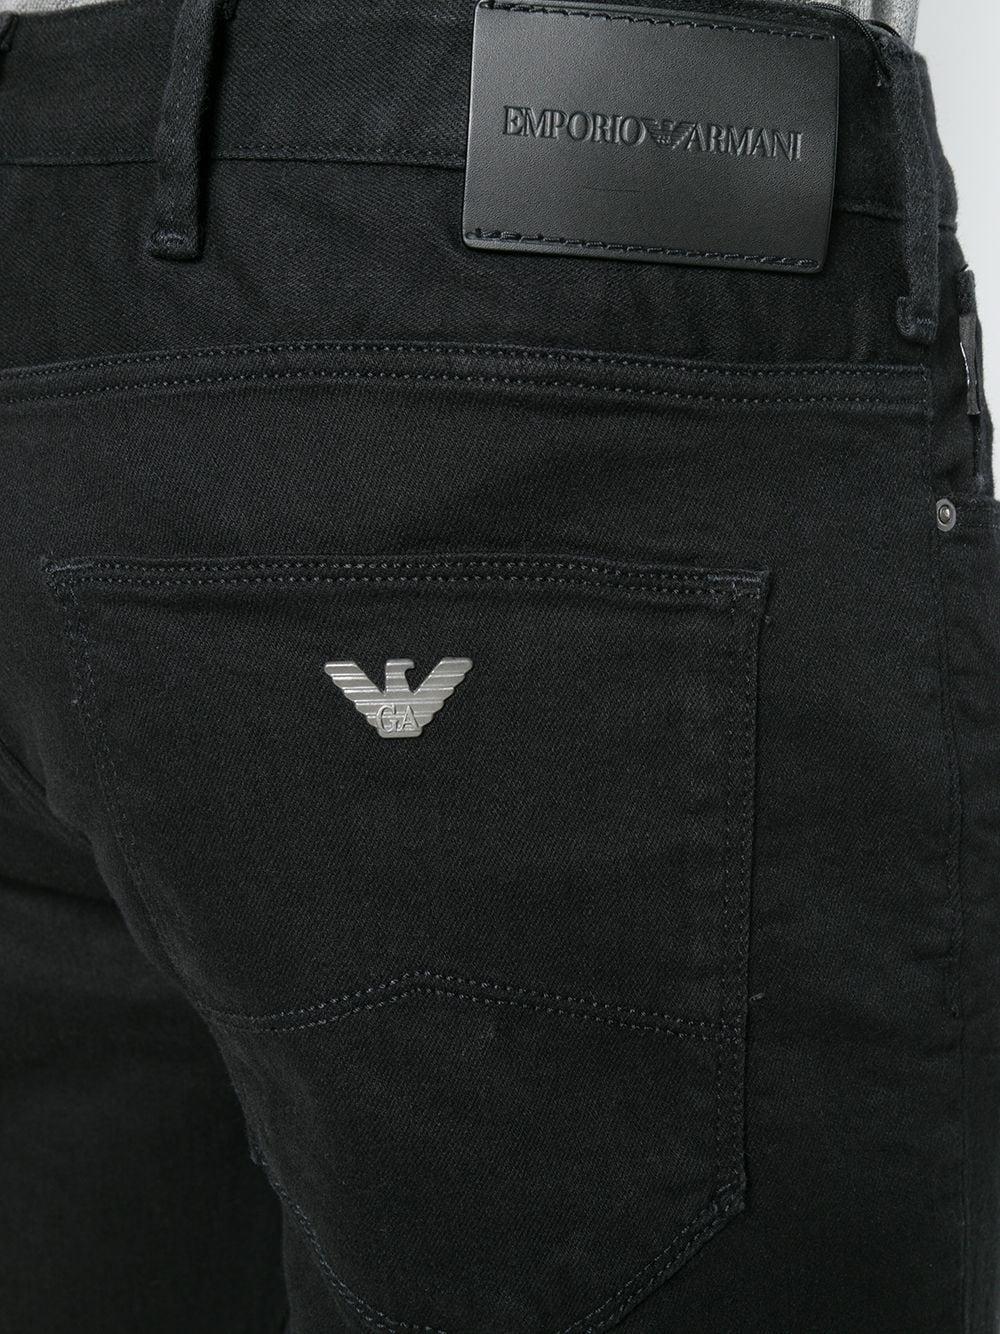 Armani Black Slim Fit Jeans Outlet, SAVE 56%.